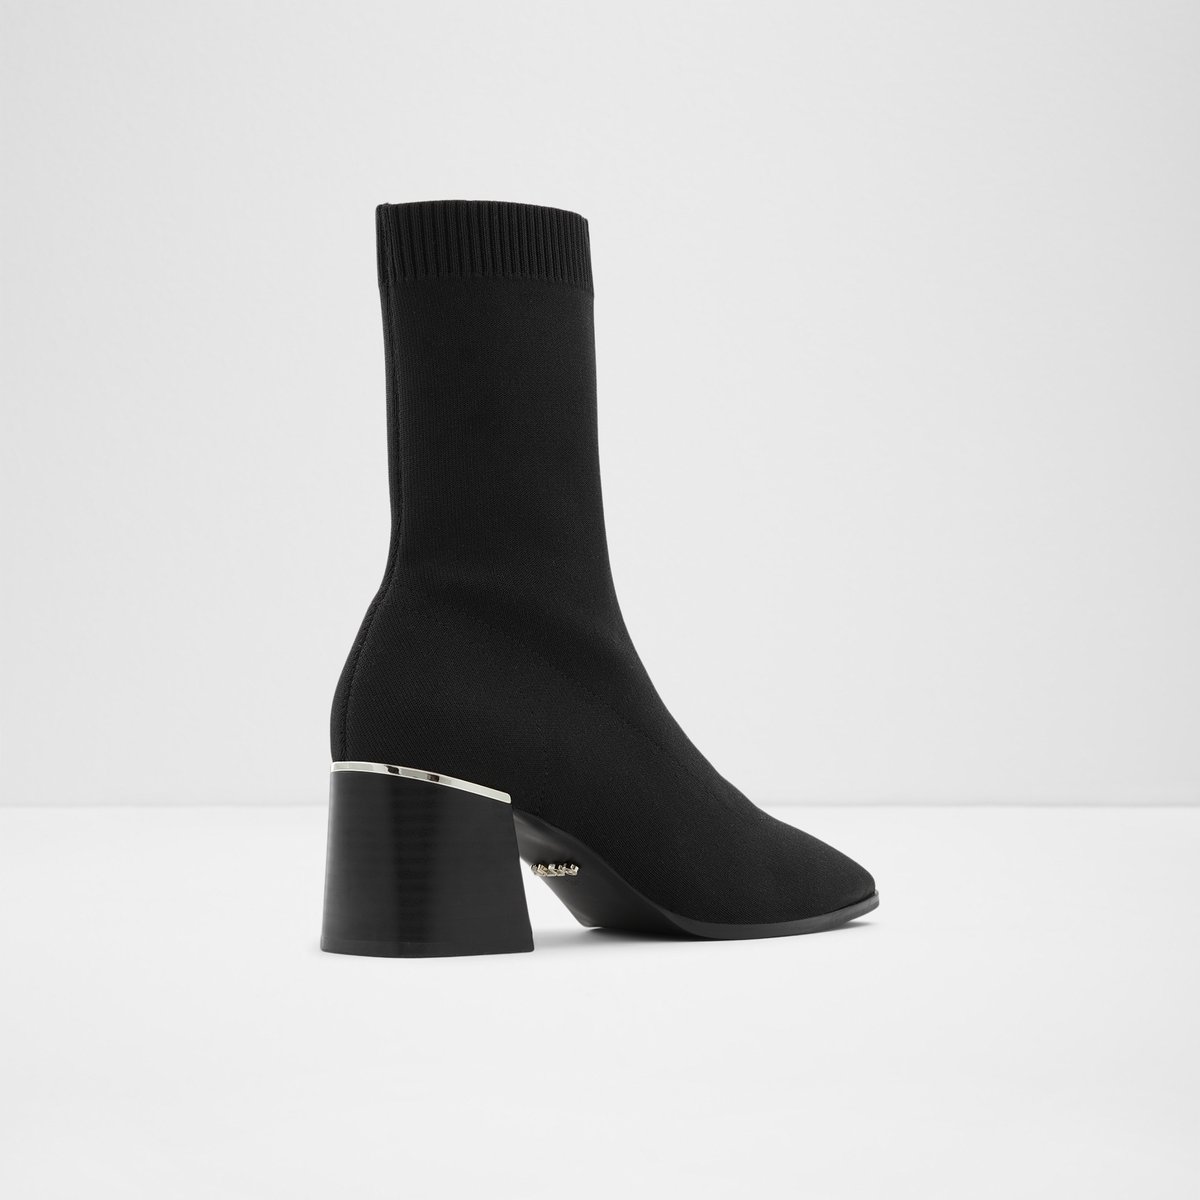 Larrgodia Black Textile Knit Women's Casual boots | ALDO Canada